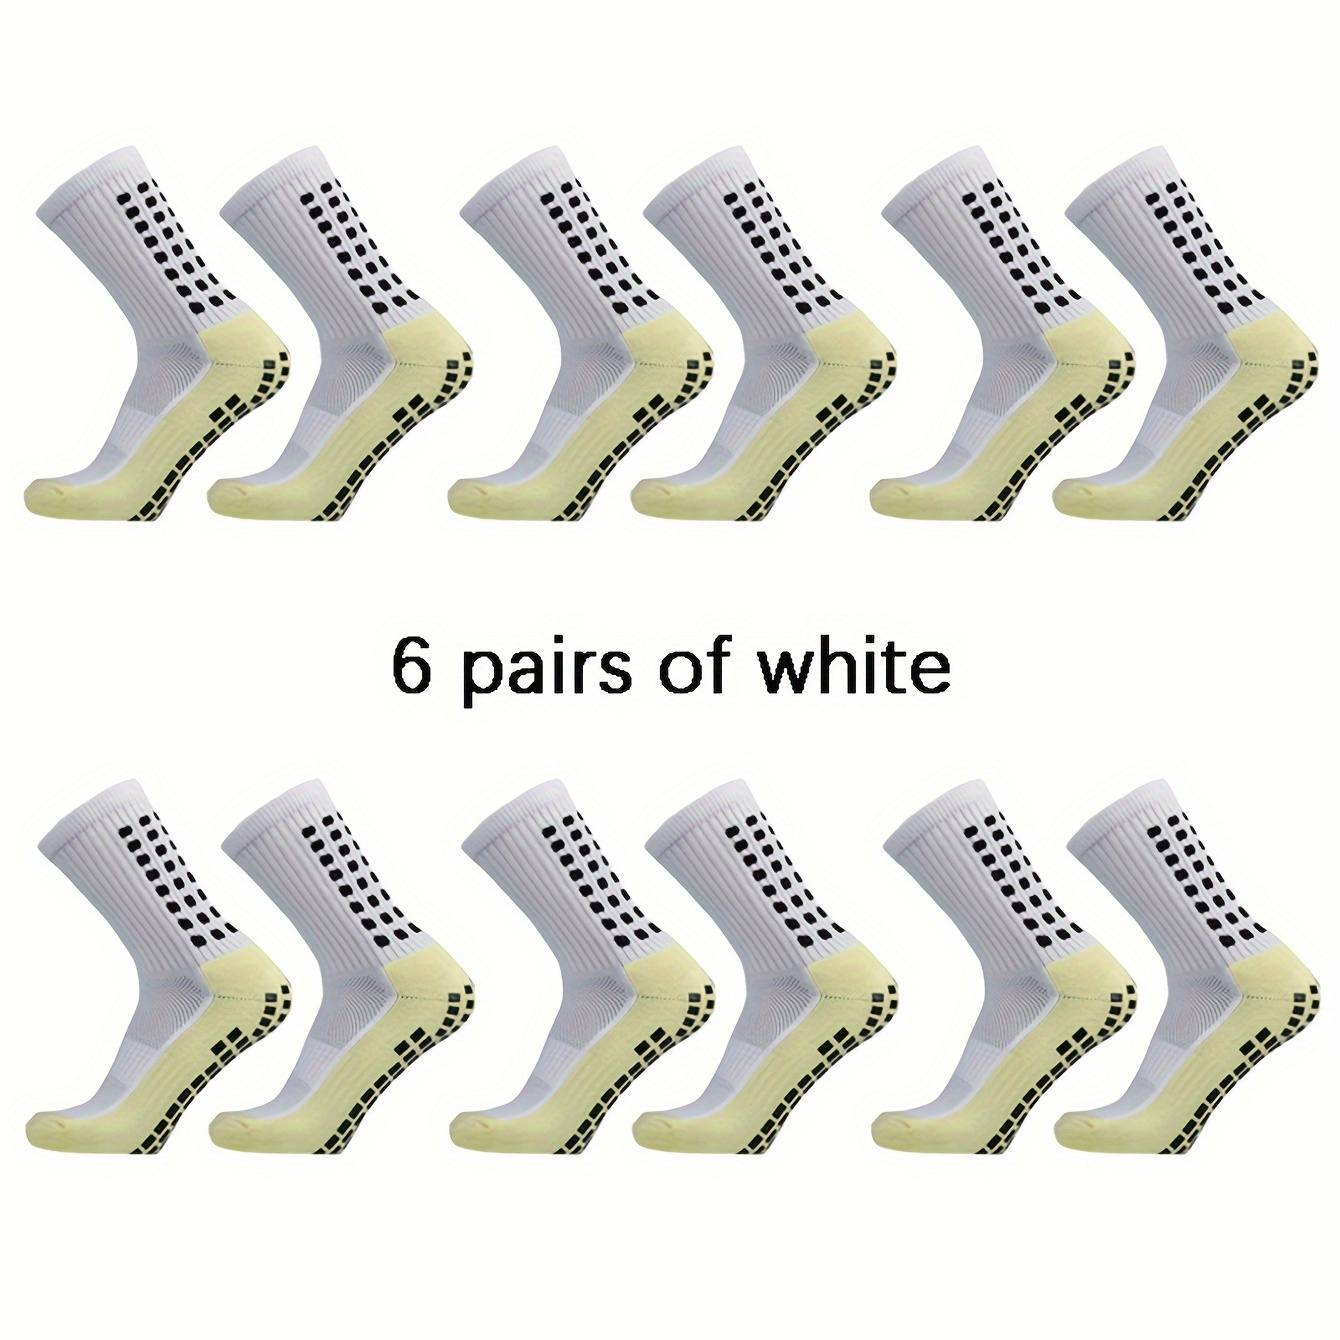 

6 Pairs Sports Outdoor Leg Football Socks Set Breathable Non Slip Silicone Grip Soccer Socks